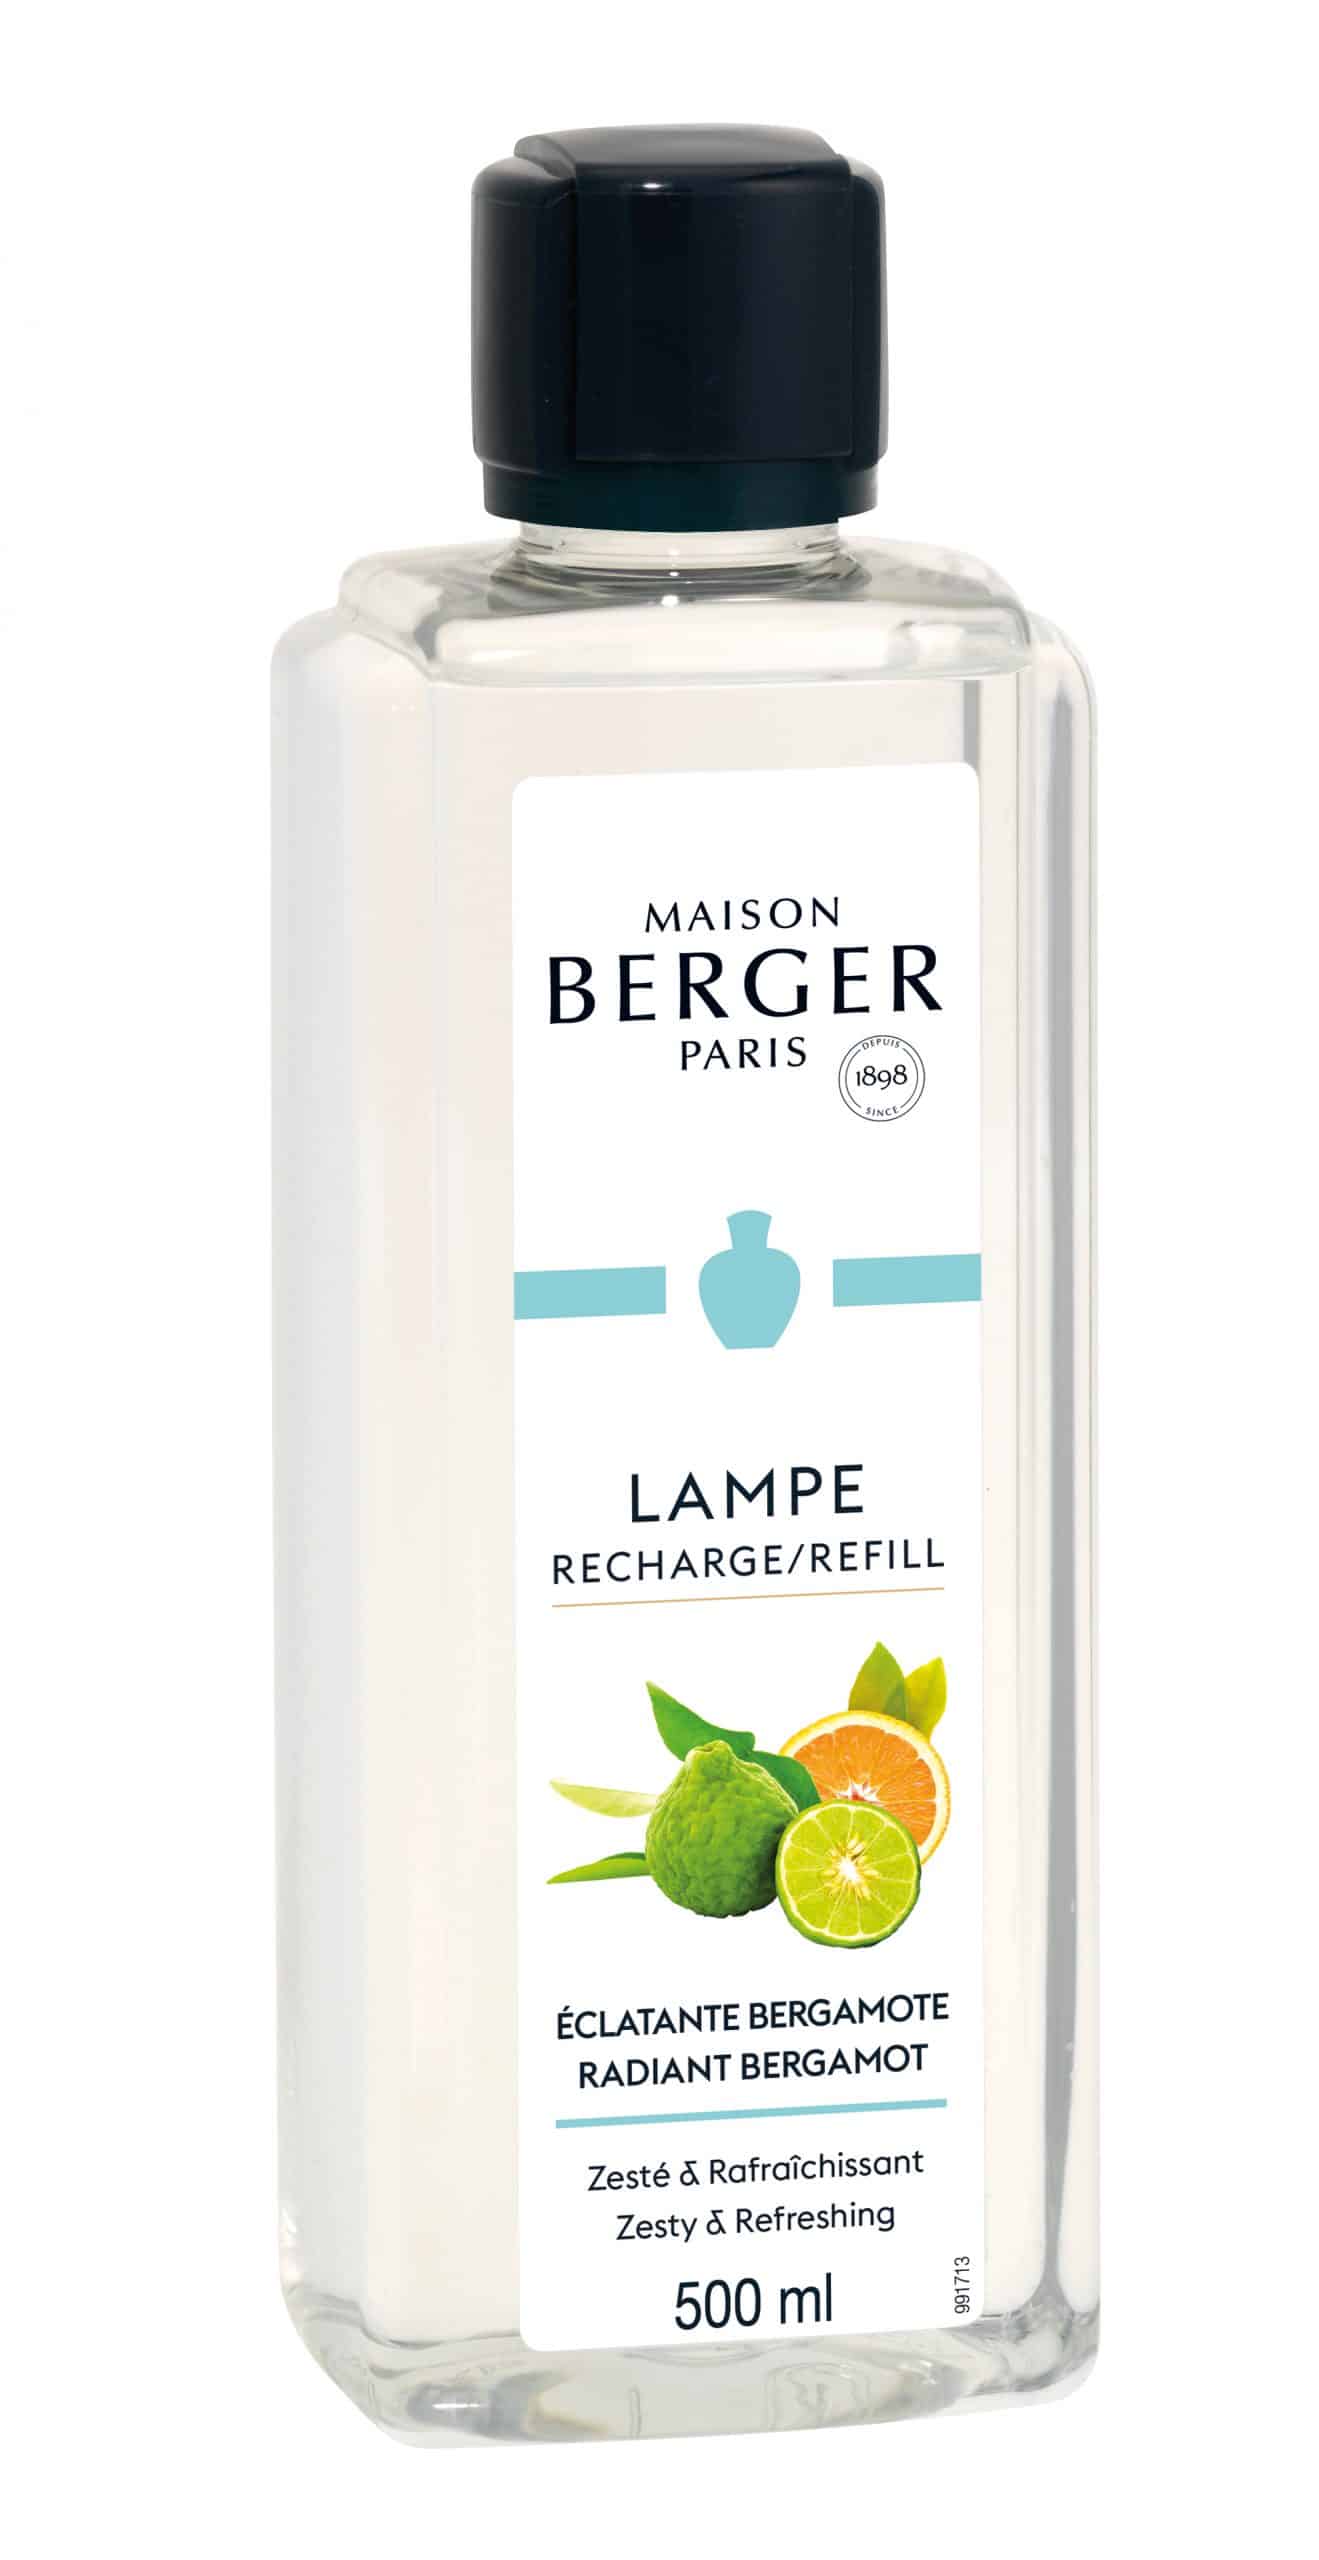 Maison Berger Paris - parfum Radiant Bergamot - 500 ml